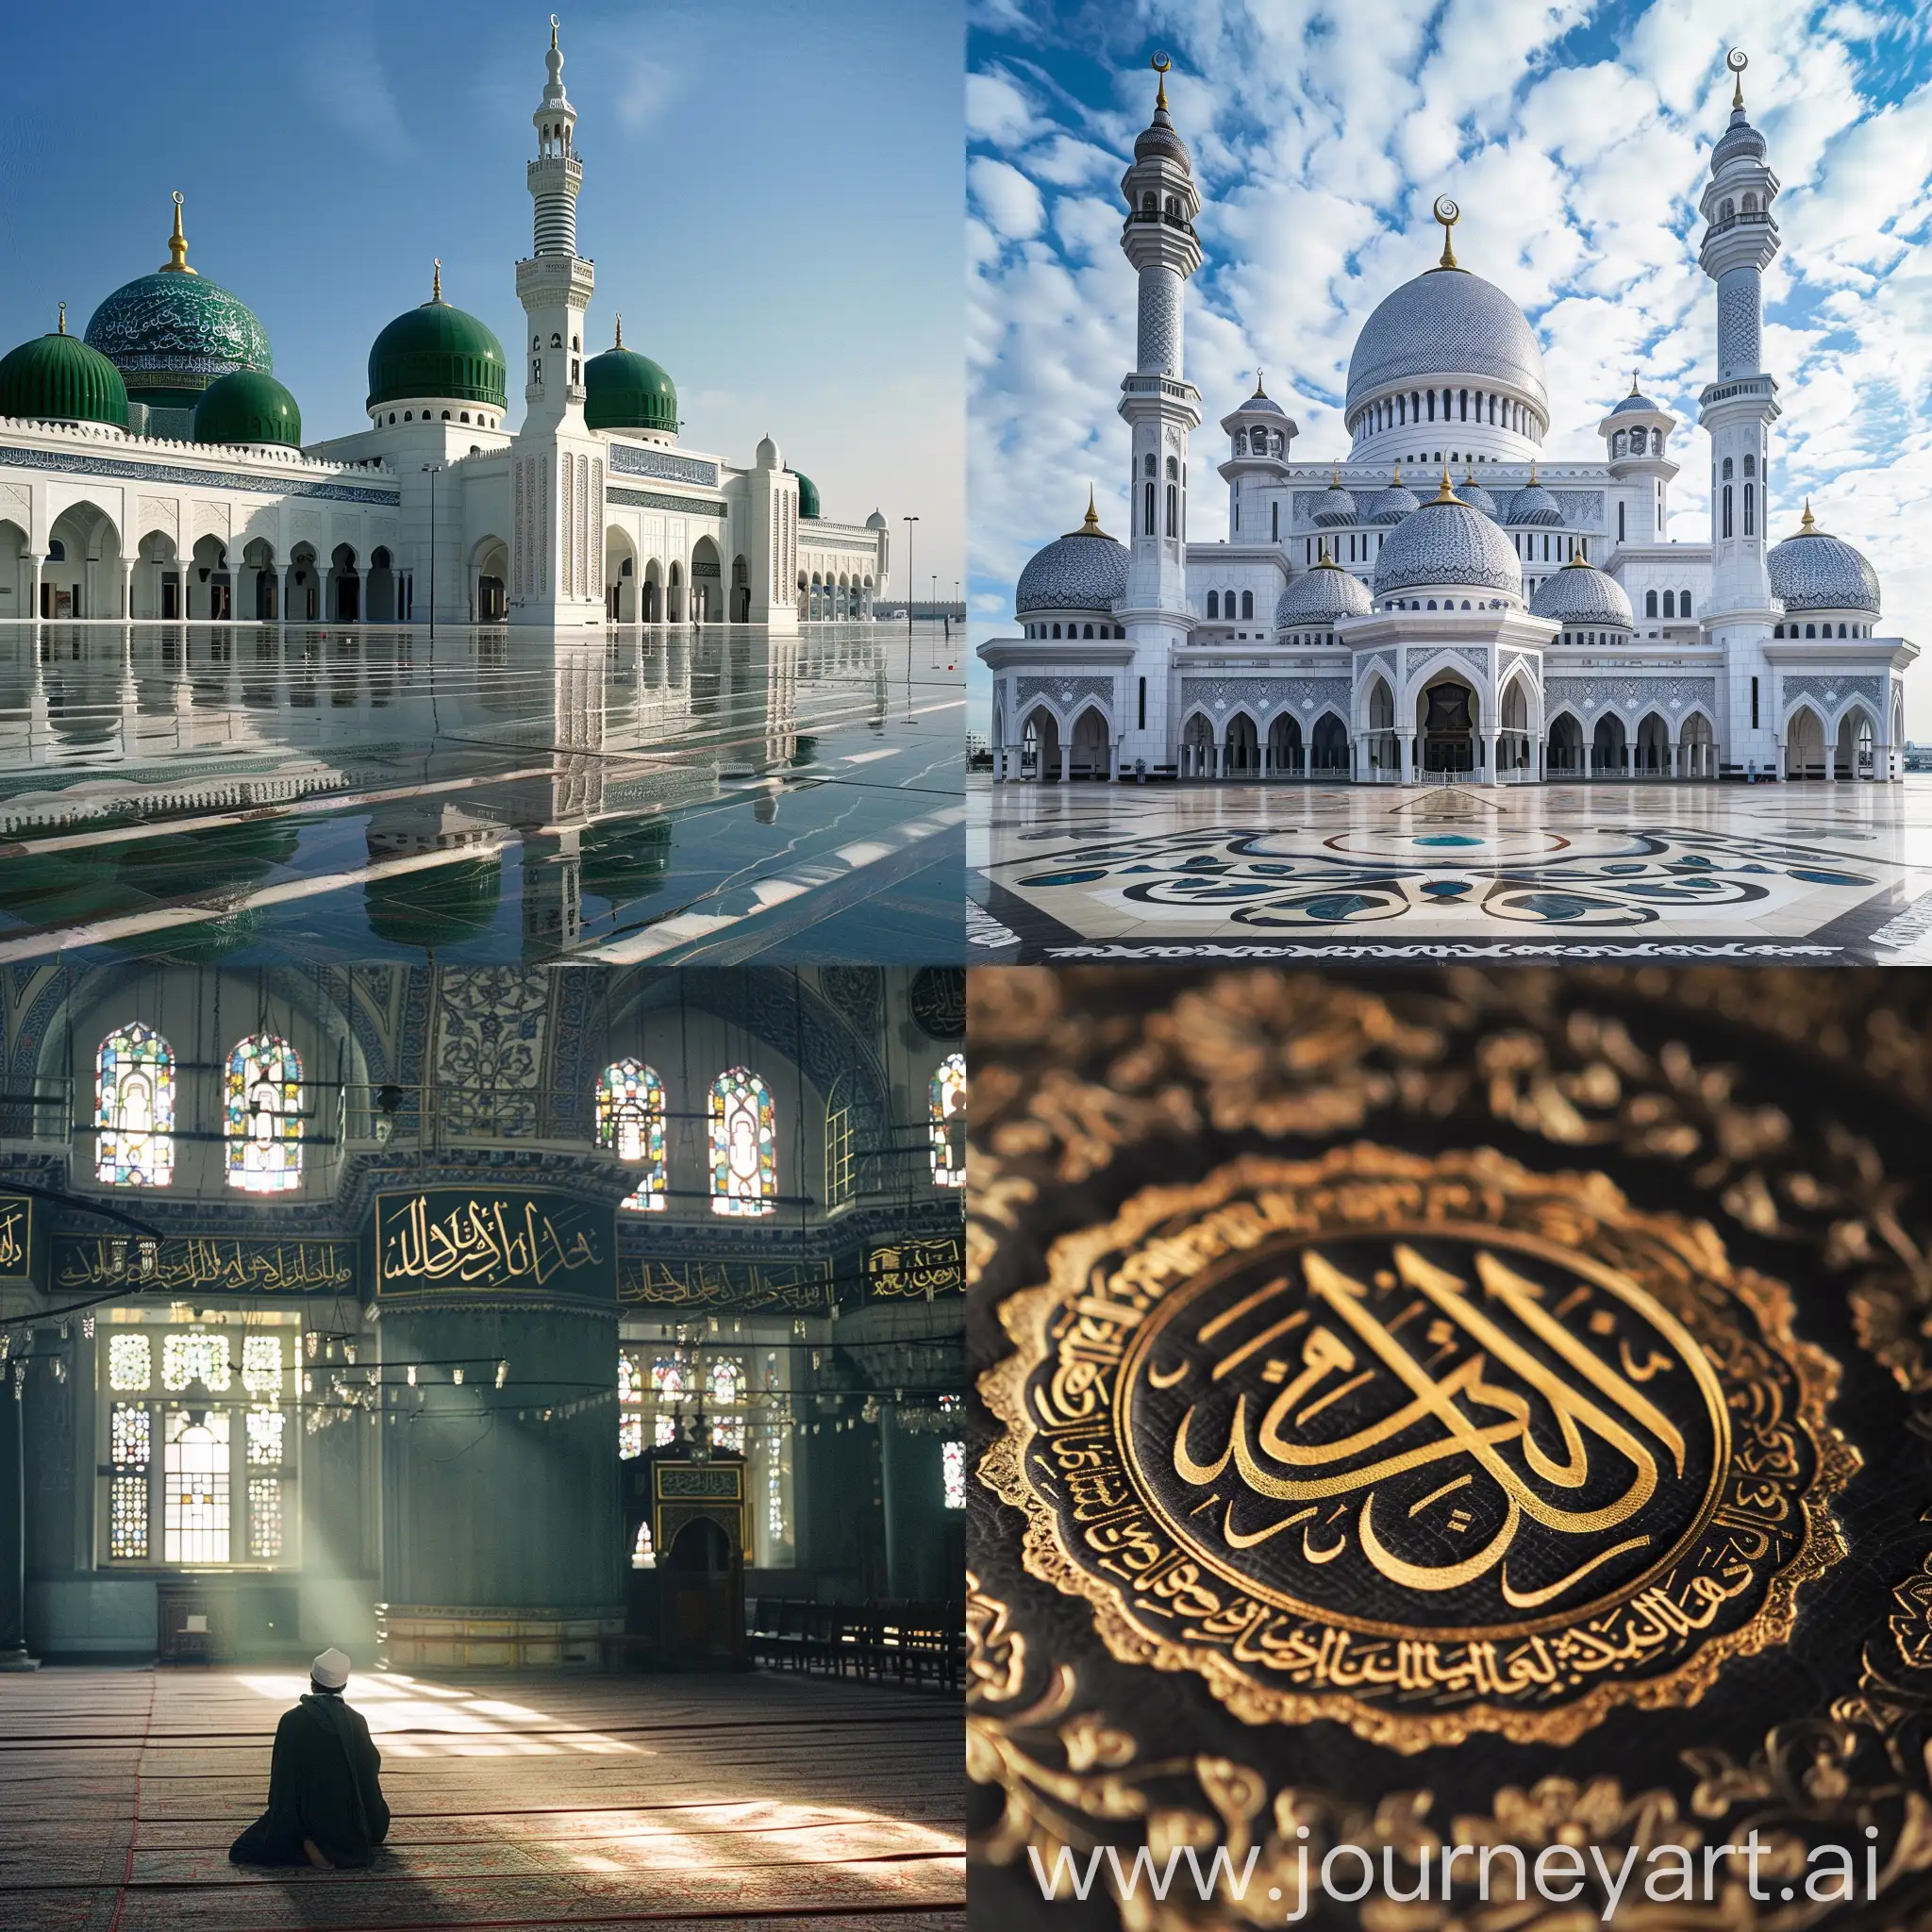 Islamic-Art-Harmonious-Geometric-Patterns-in-a-11-Aspect-Ratio